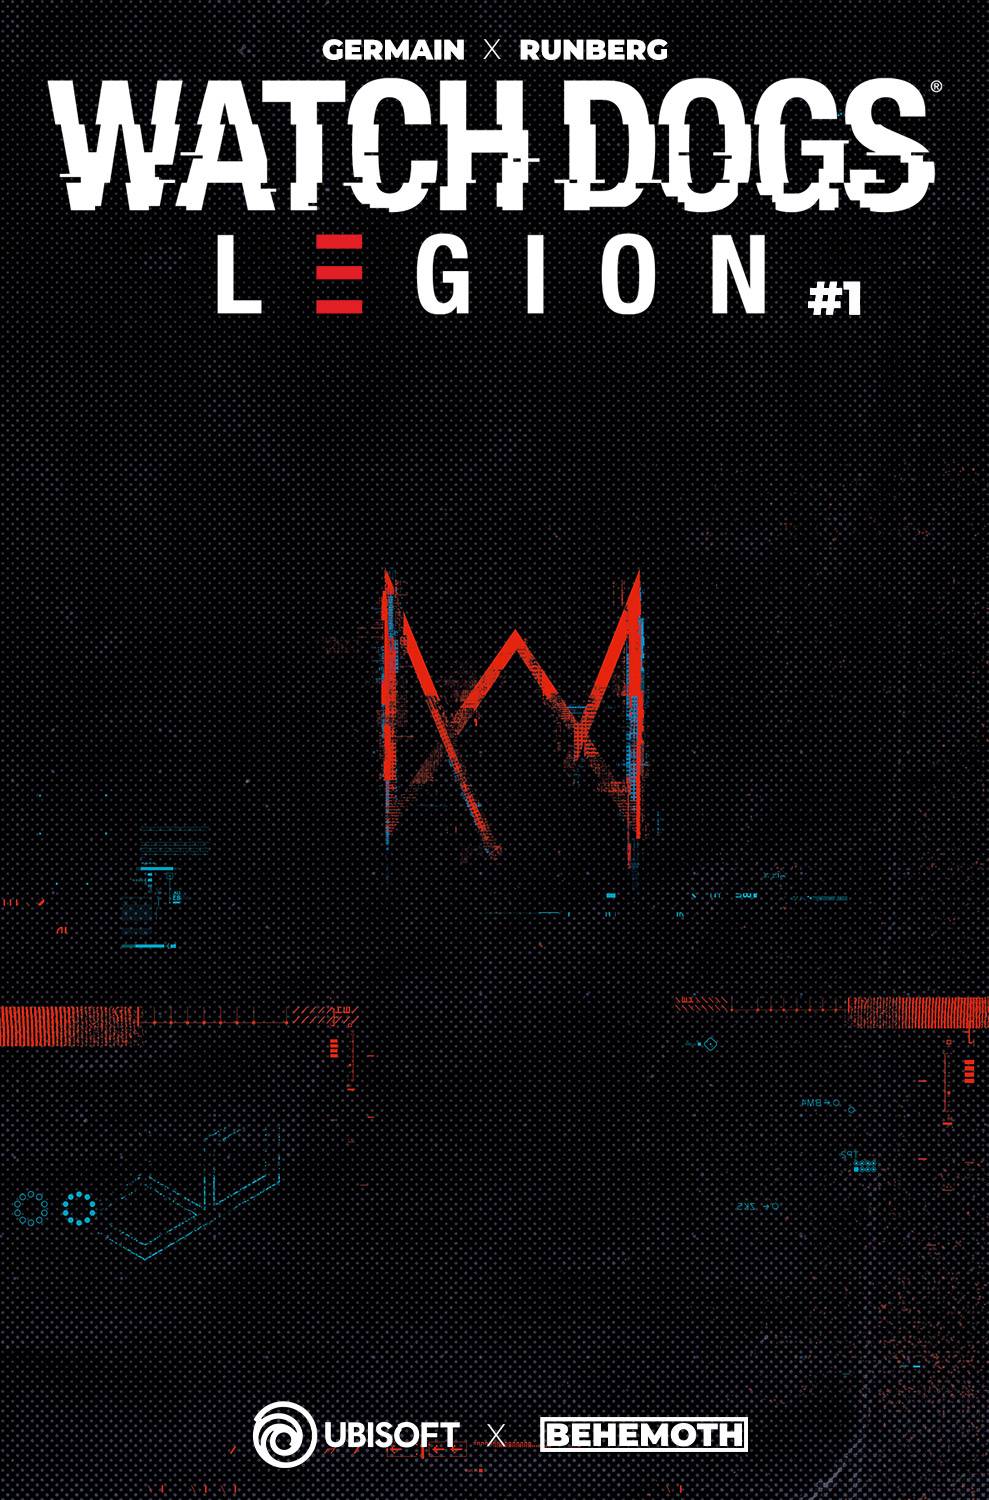 Watch Dogs Legion #1 (of 4) (Cover F - Ltd Edition)